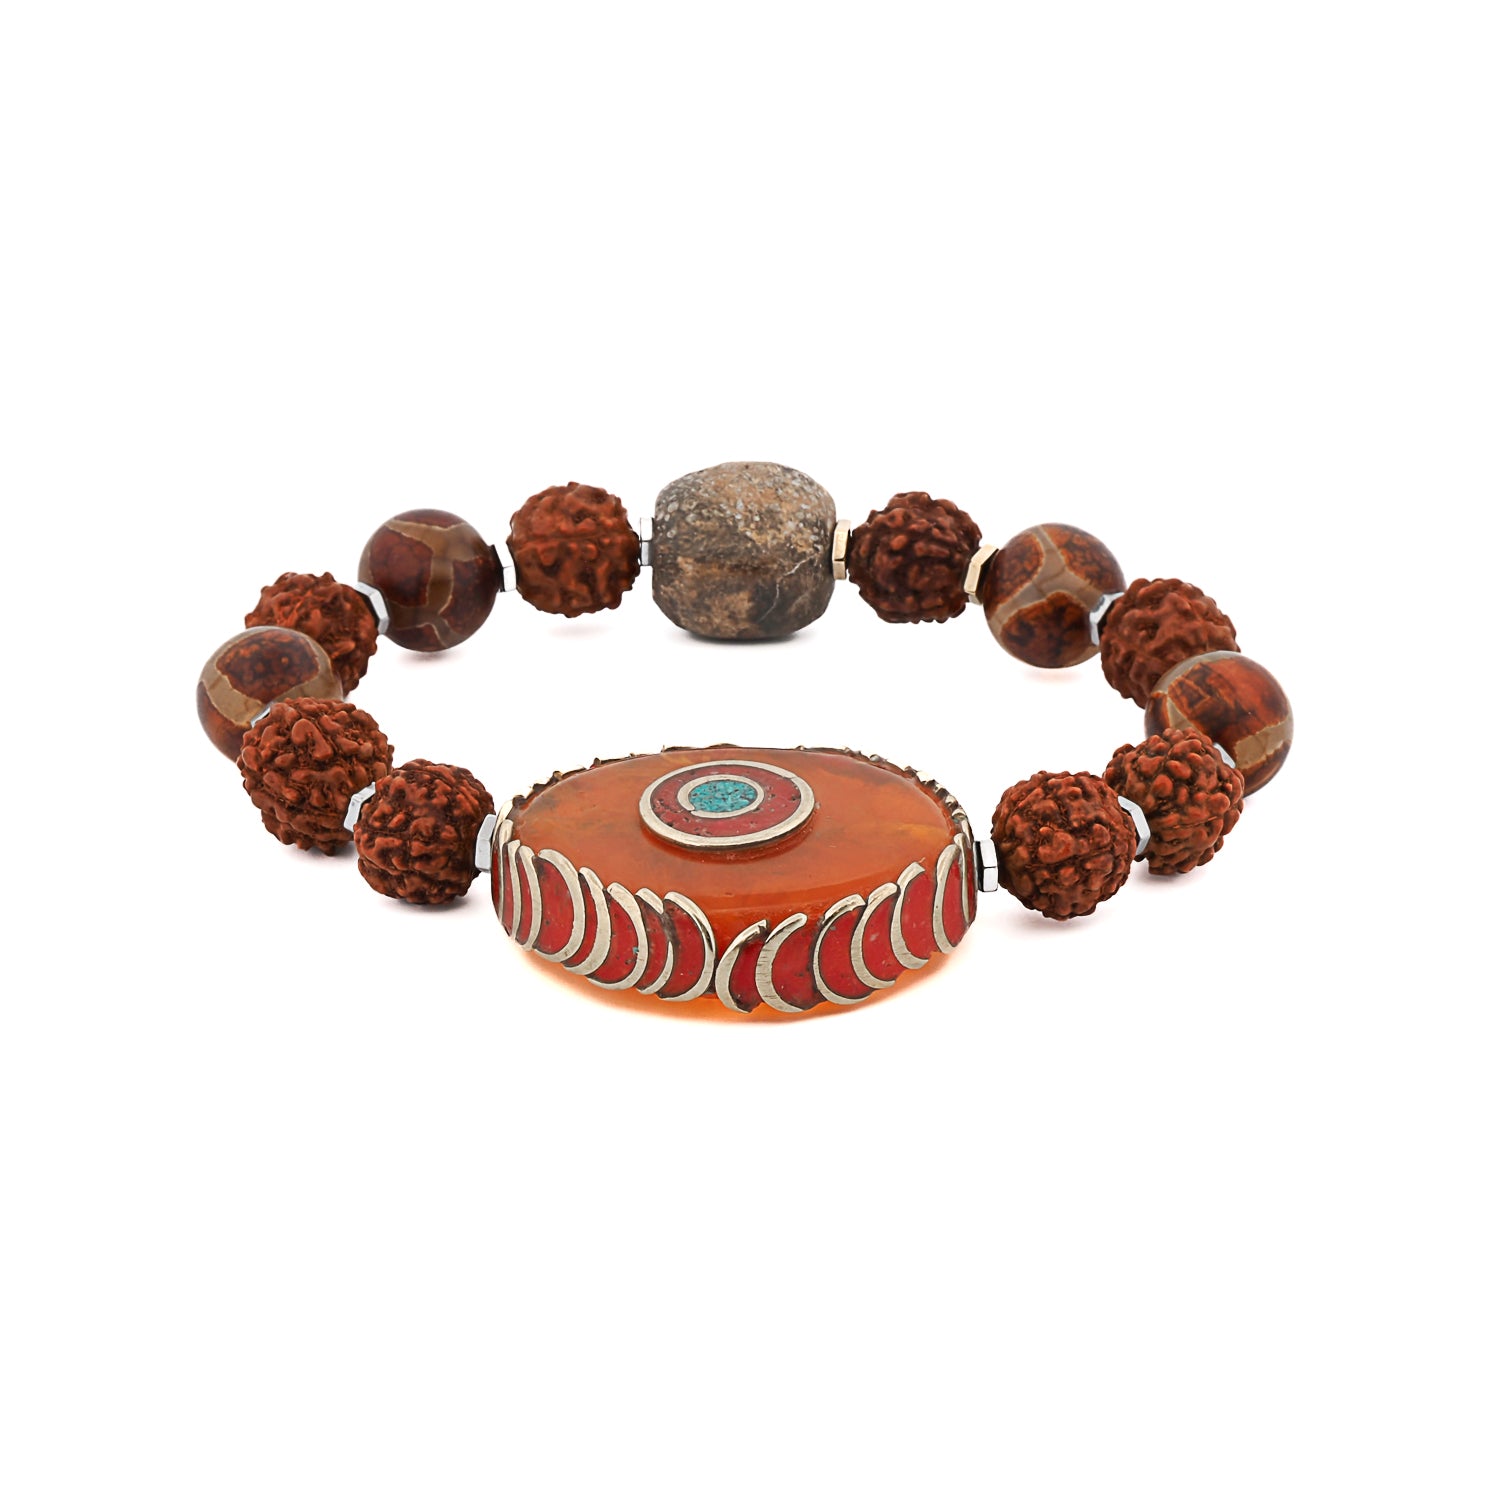 Prayer Beads Rudraksha Meditation Mala Bracelet